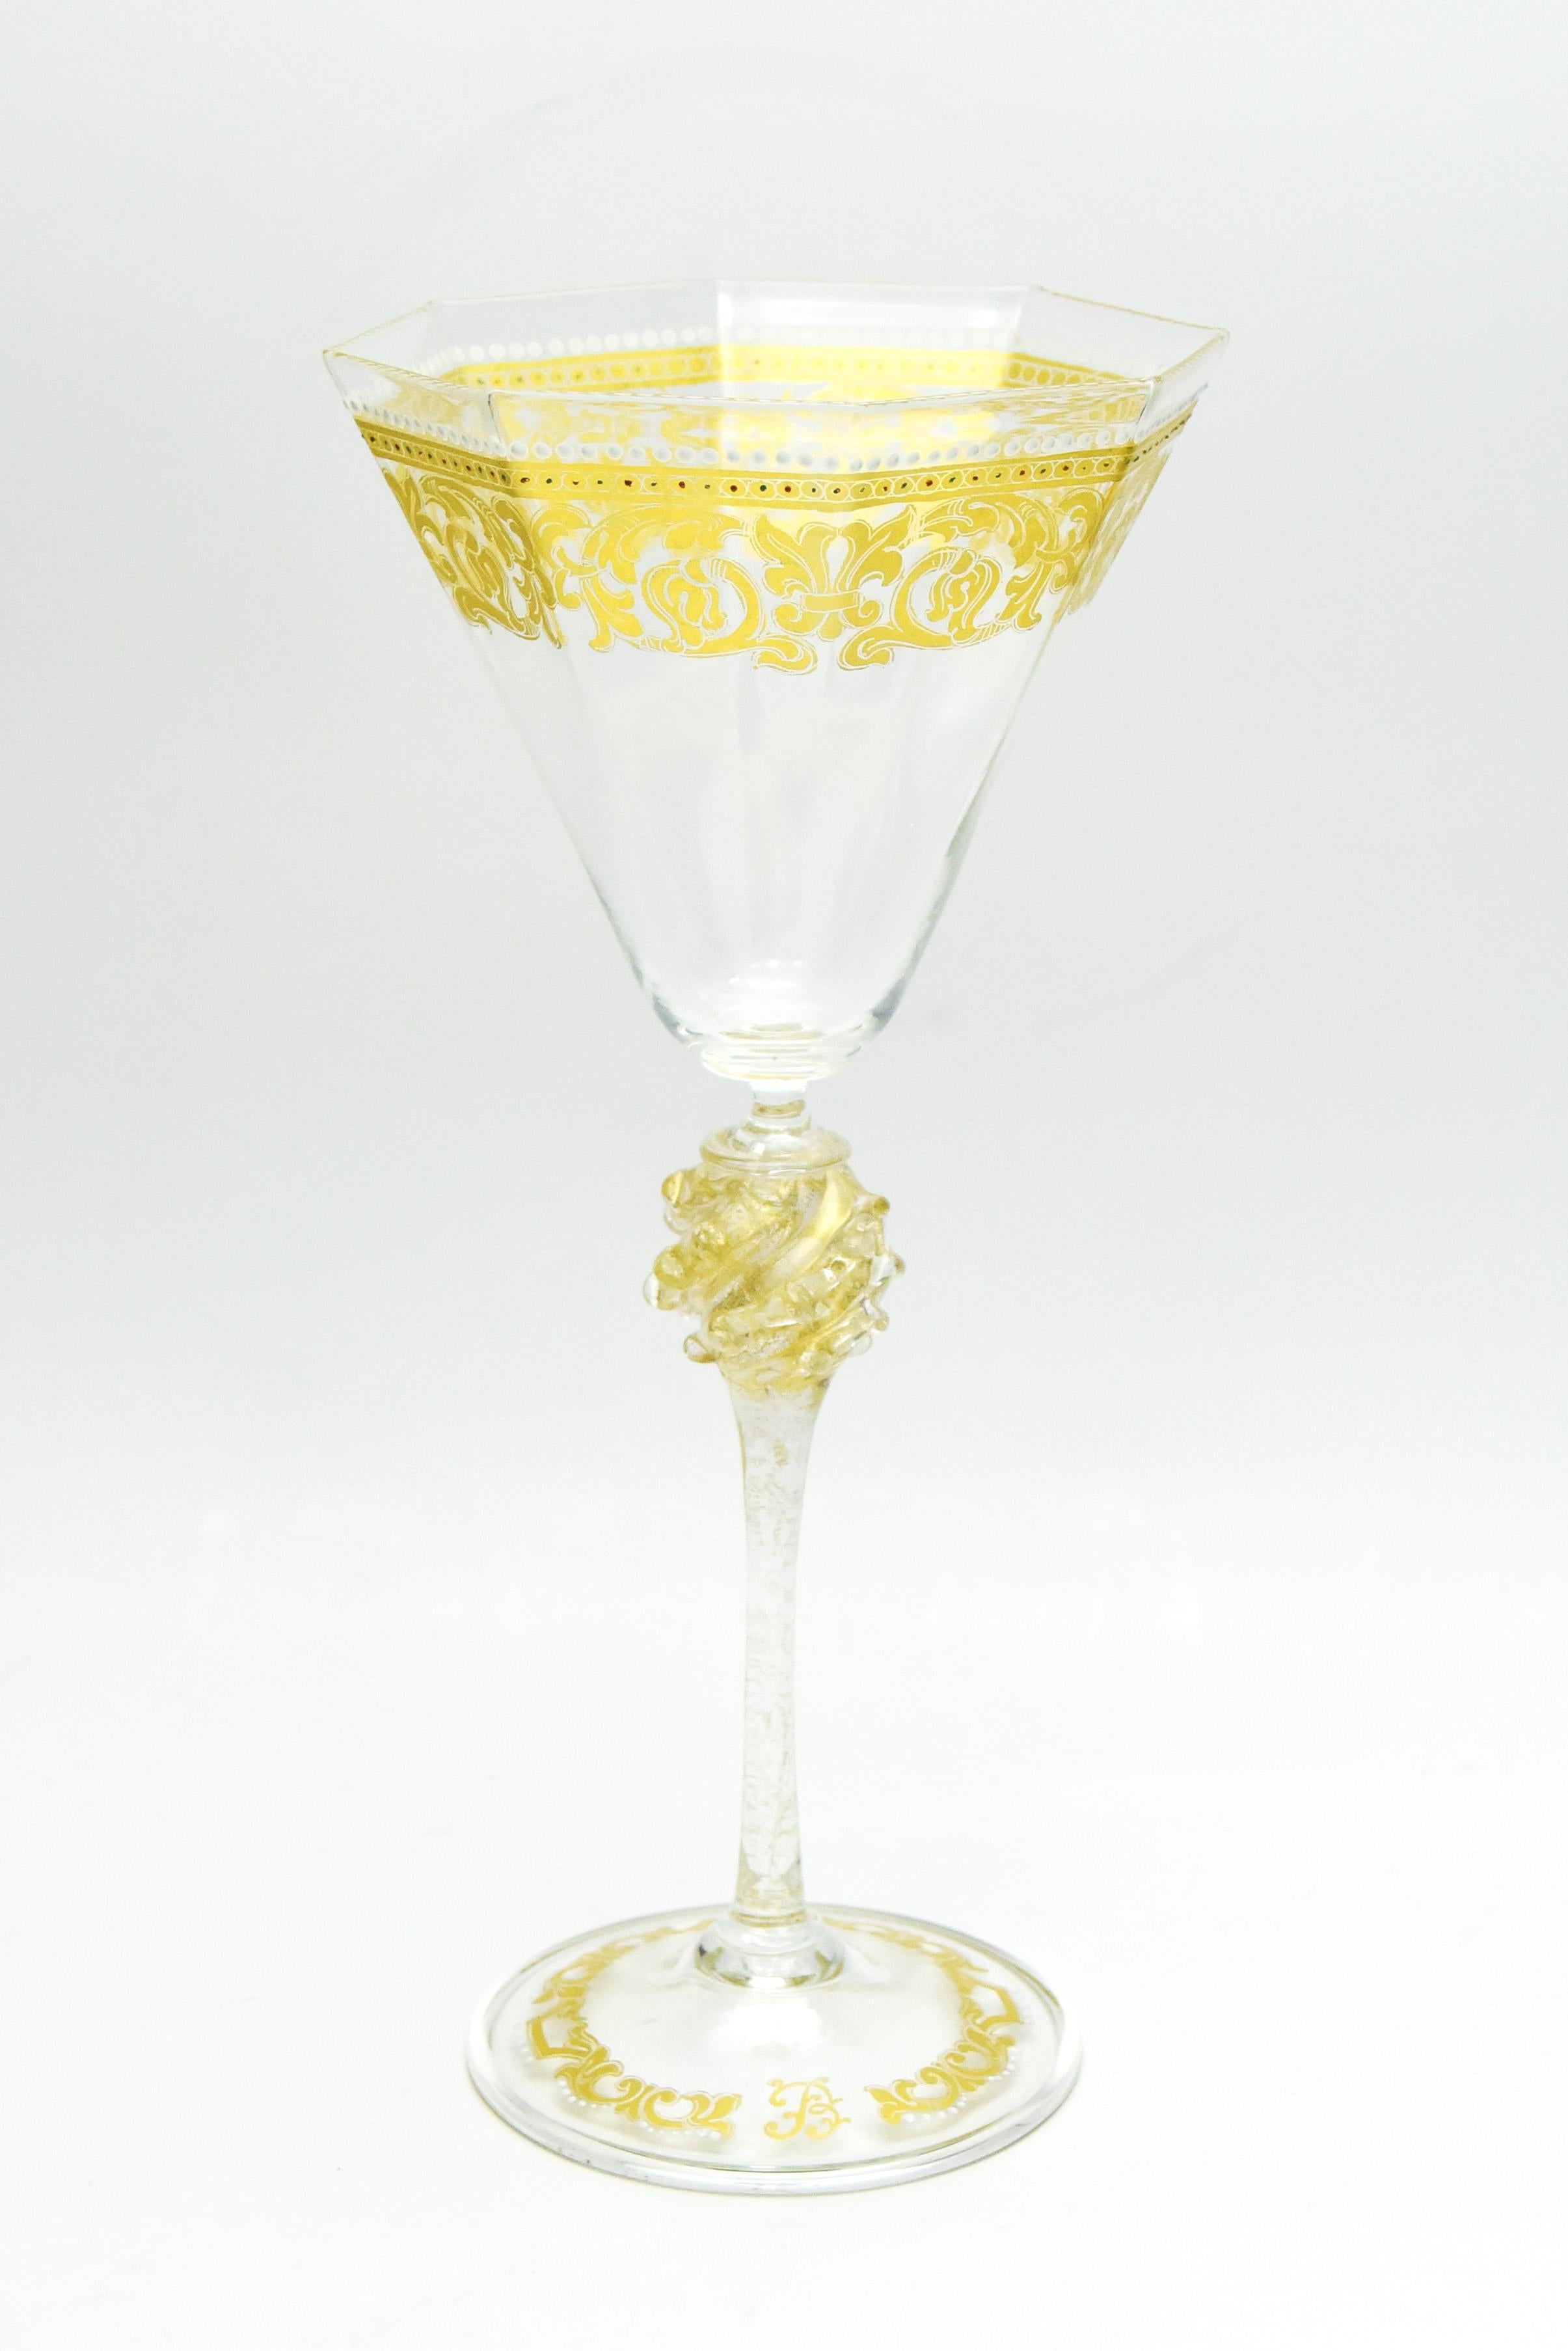 Enameled Salviati Venetian Stemware Octagonal Service with Gold & White Enamel Decoration For Sale